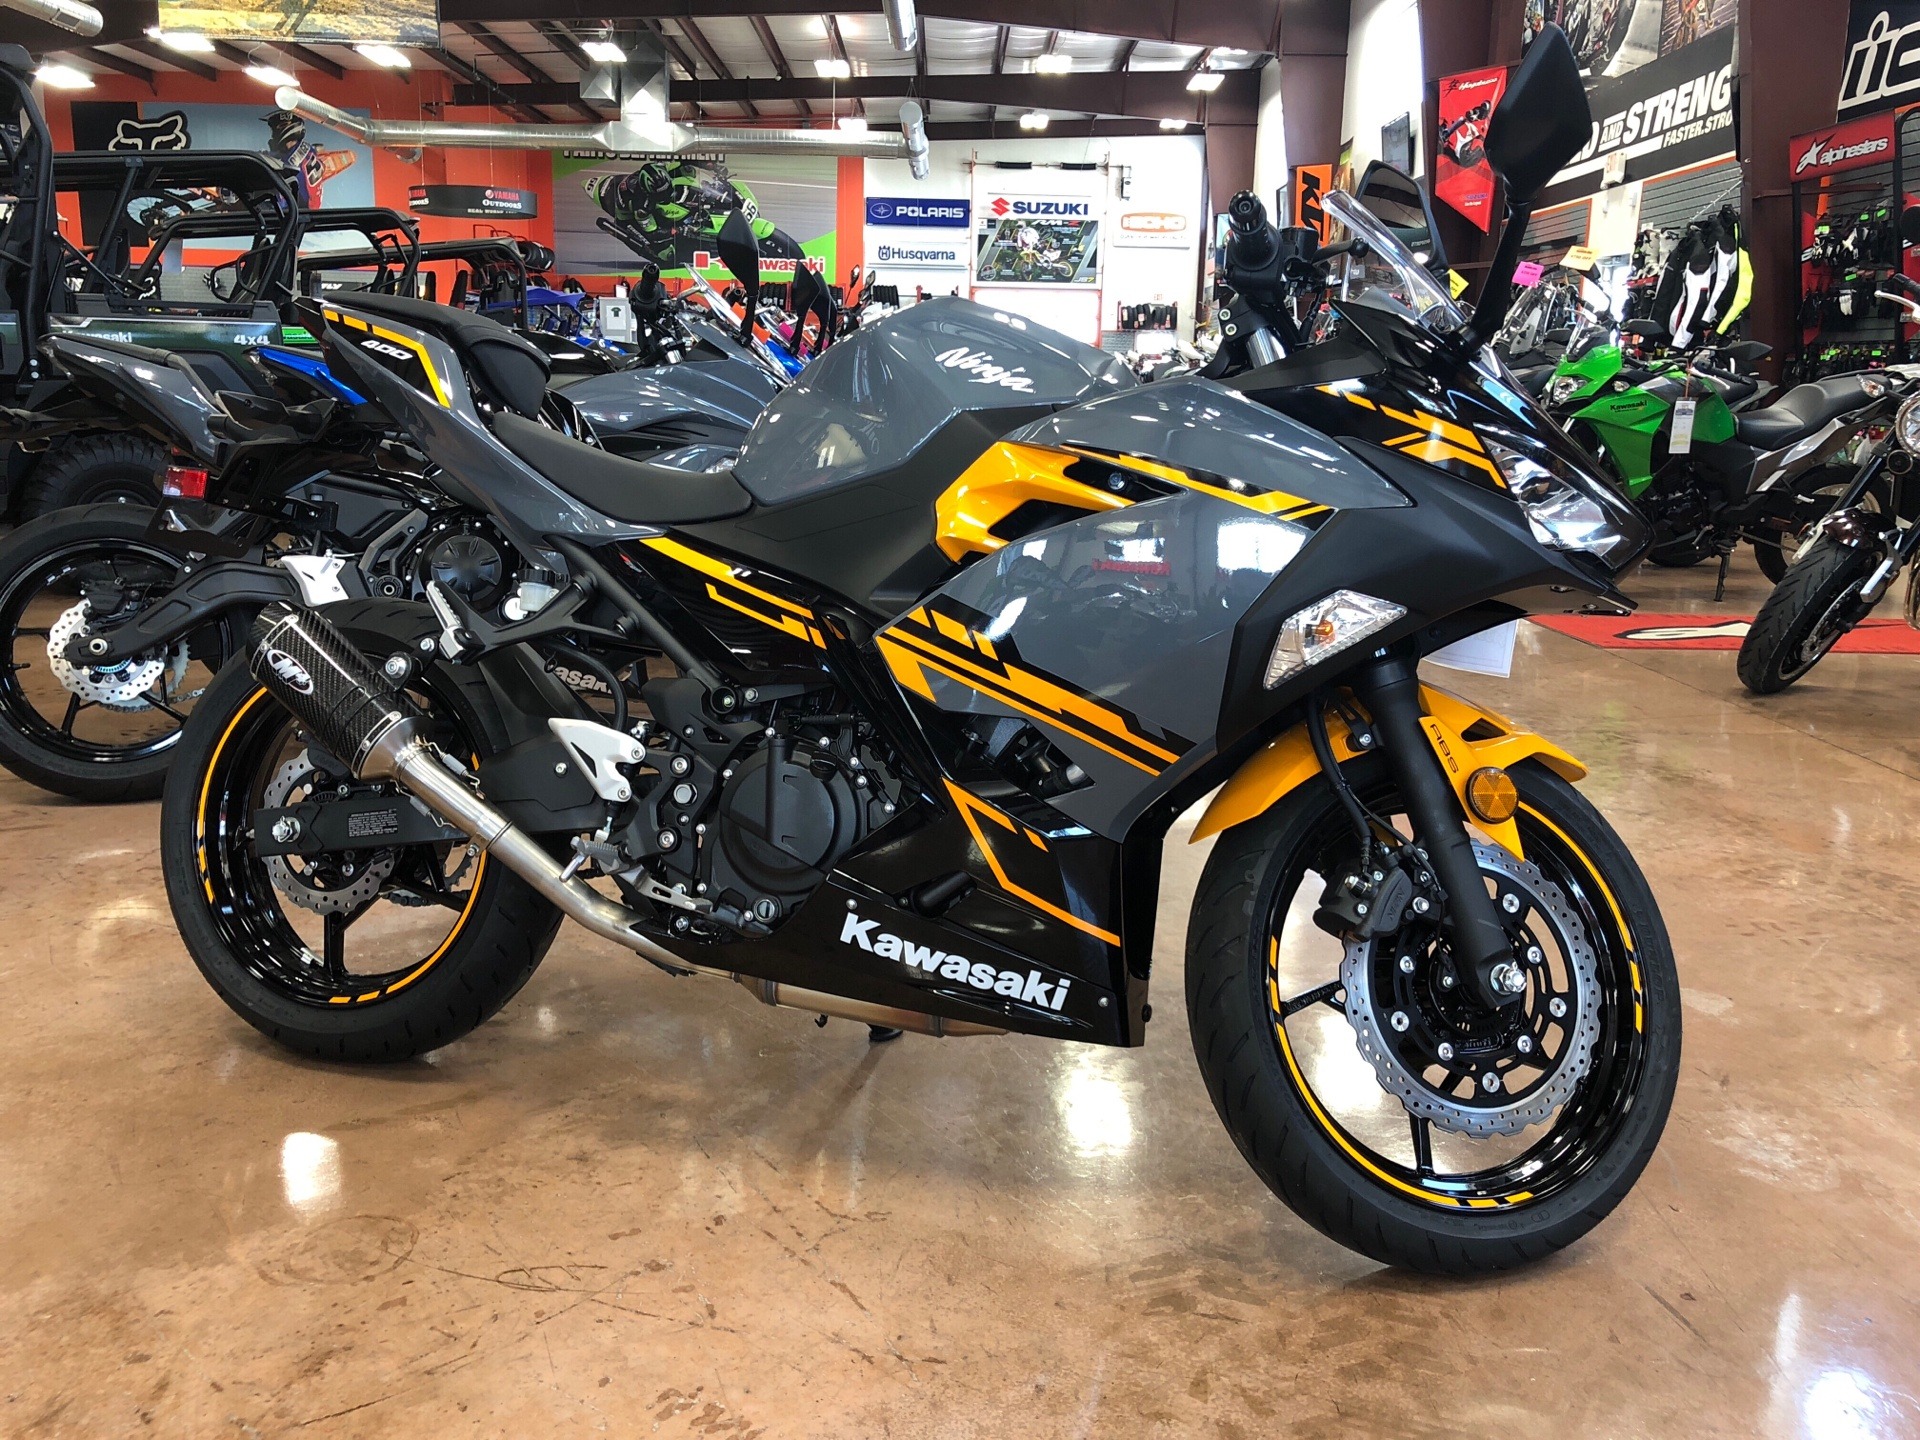 2018 Kawasaki Ninja 400 ABS For Sale Evansville, IN : 54803